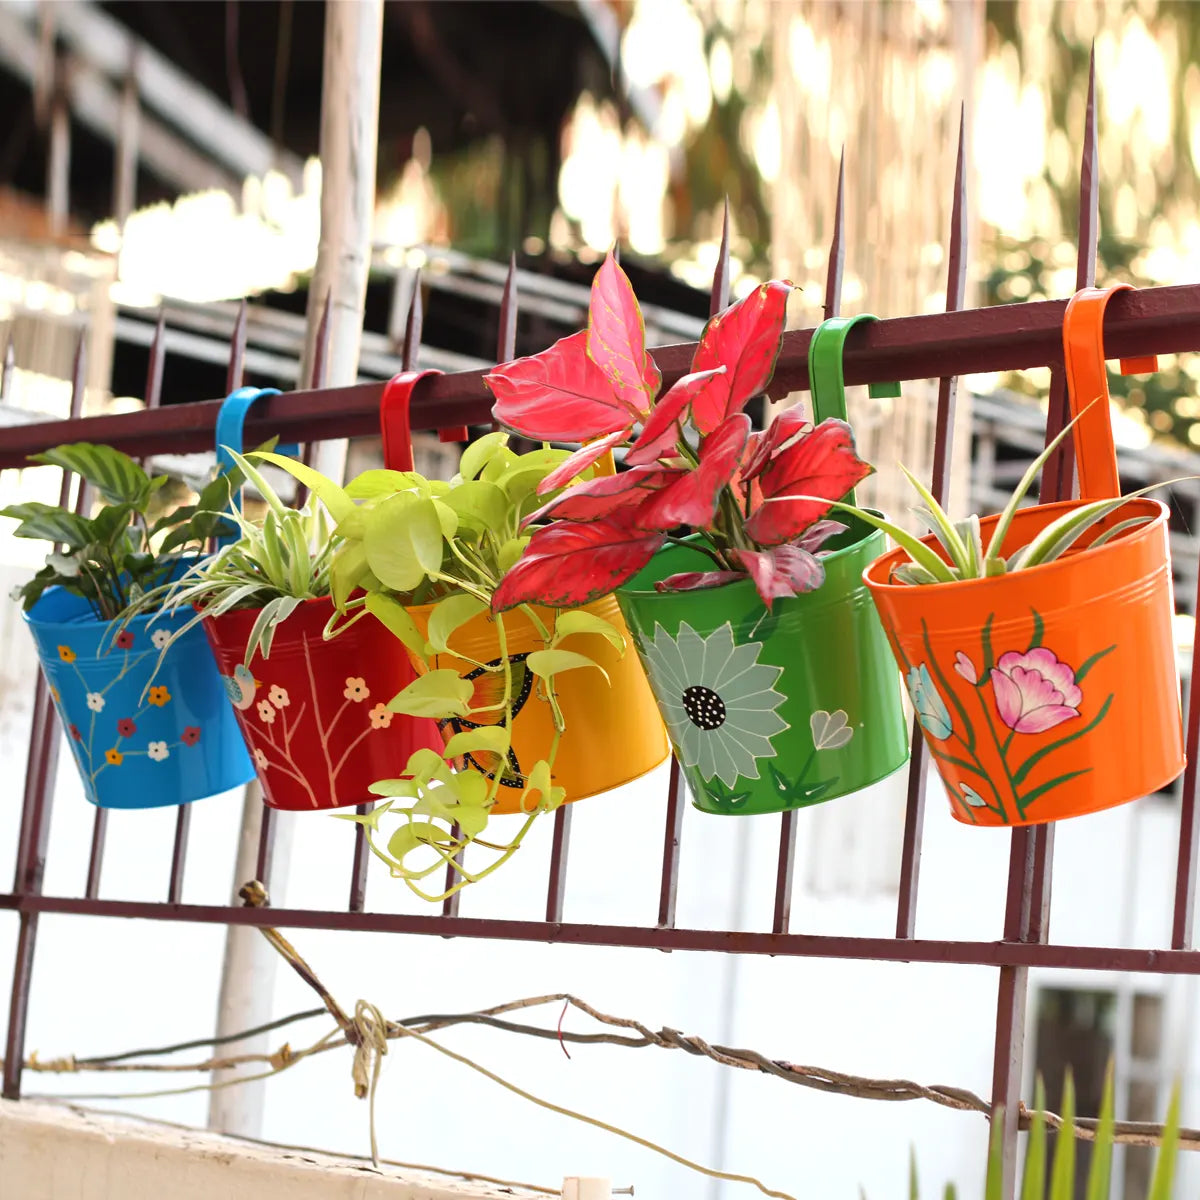 Colorful Round Shape Railing, Balcony Hanging Metal Planters (Multicolored) (Set of 5) Gardening Urban Plant 